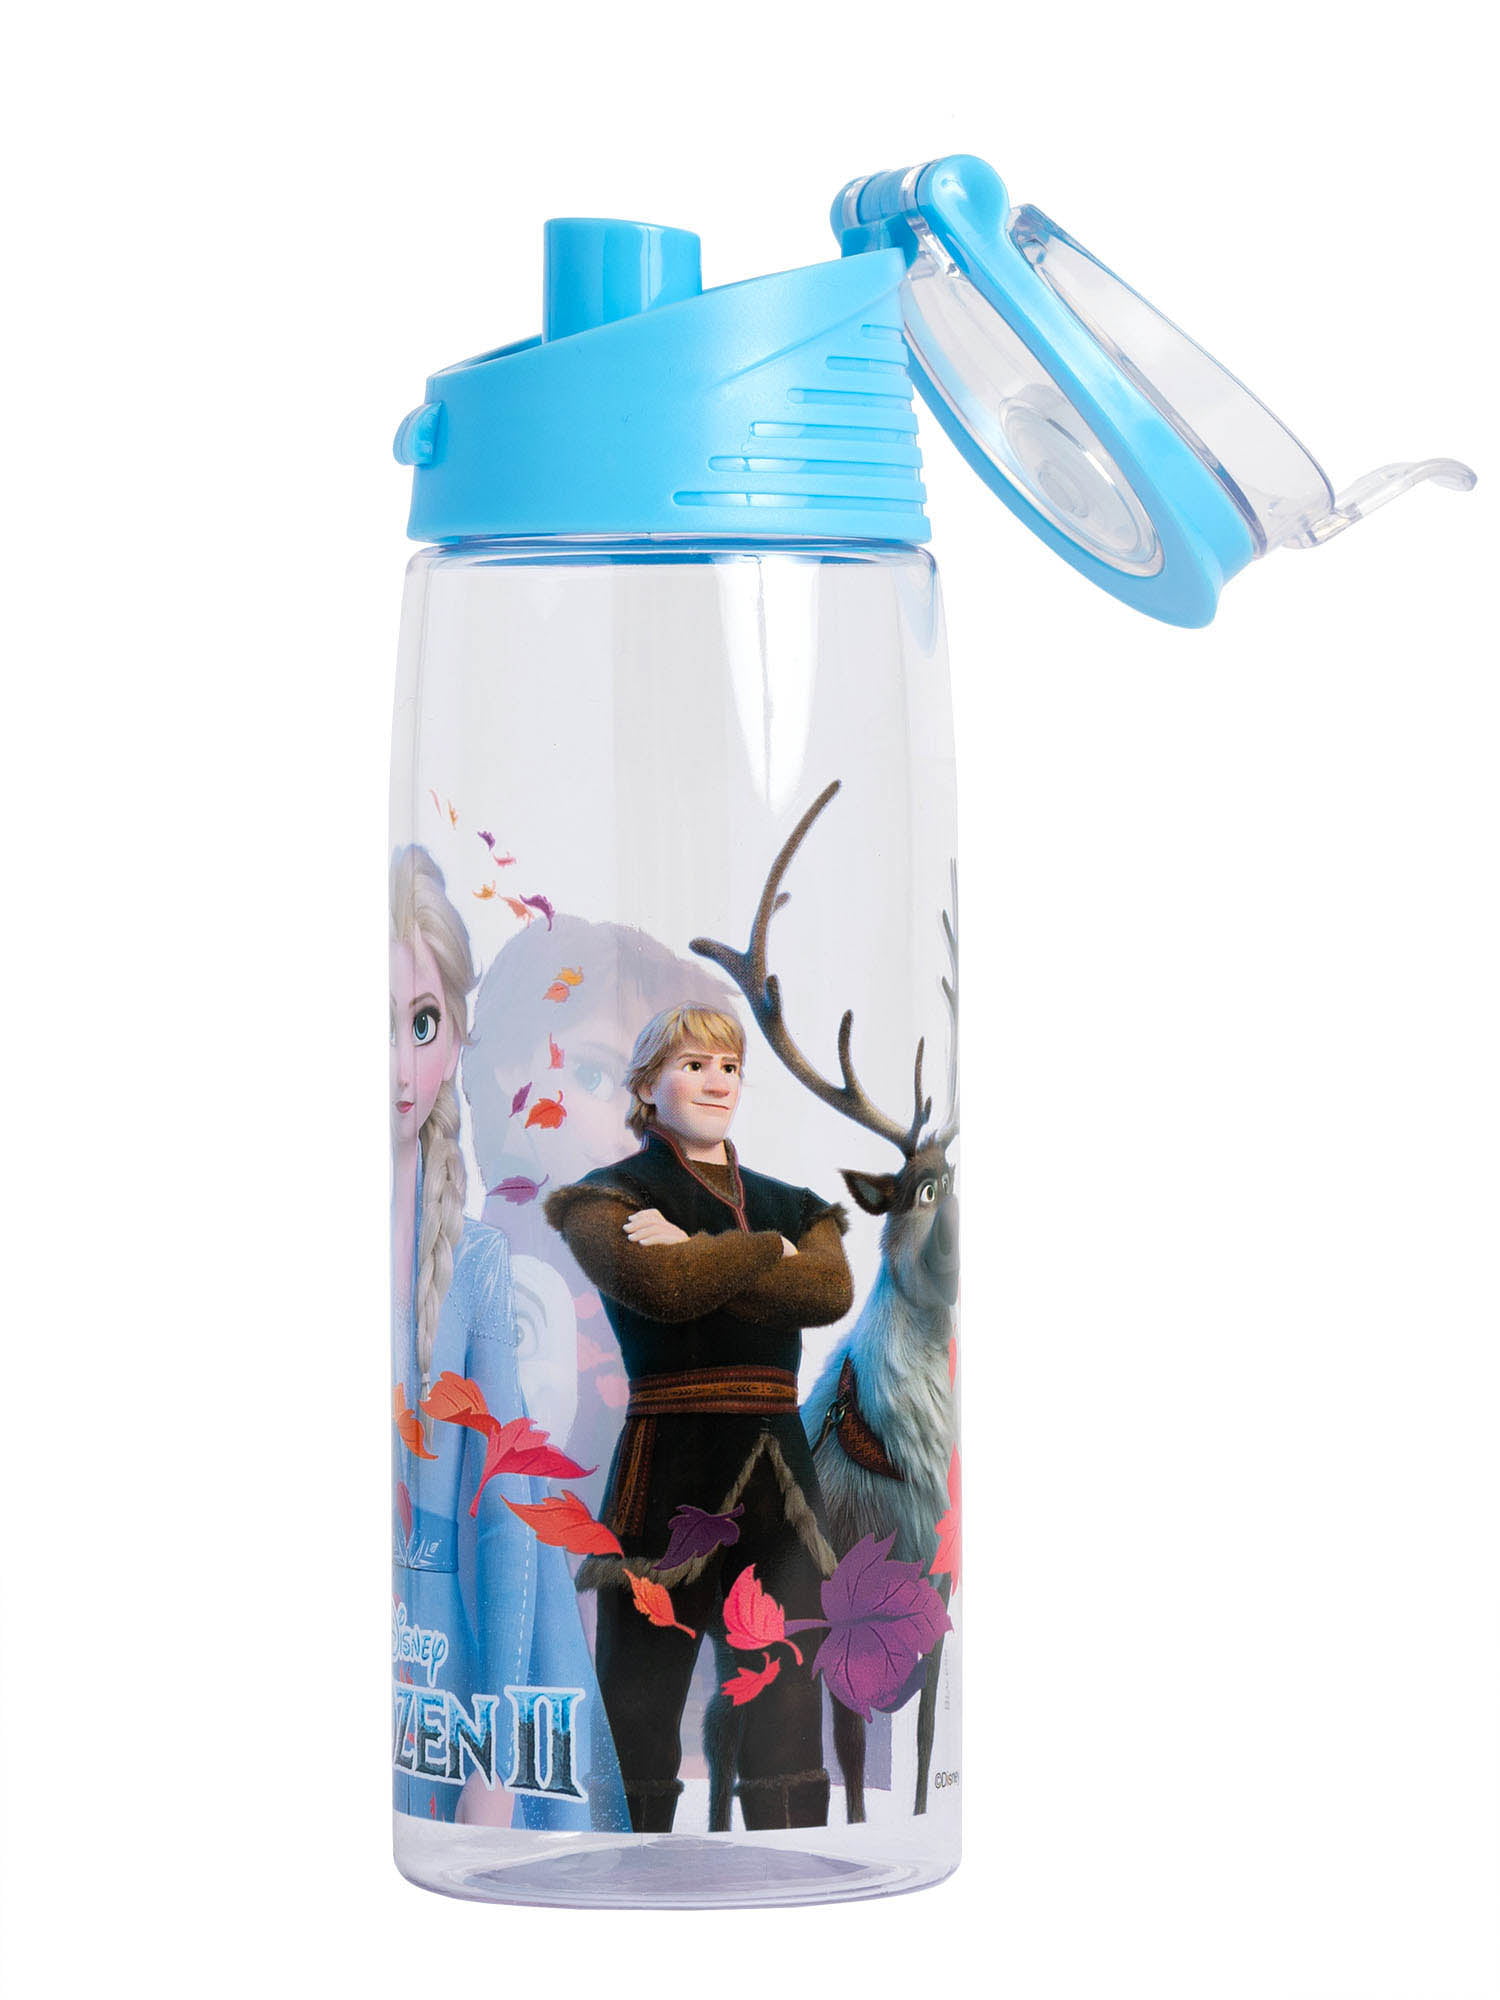 Disney Lilo & Stitch Flowers 32-Ounce Twist Spout Water Bottle and Sticker Set